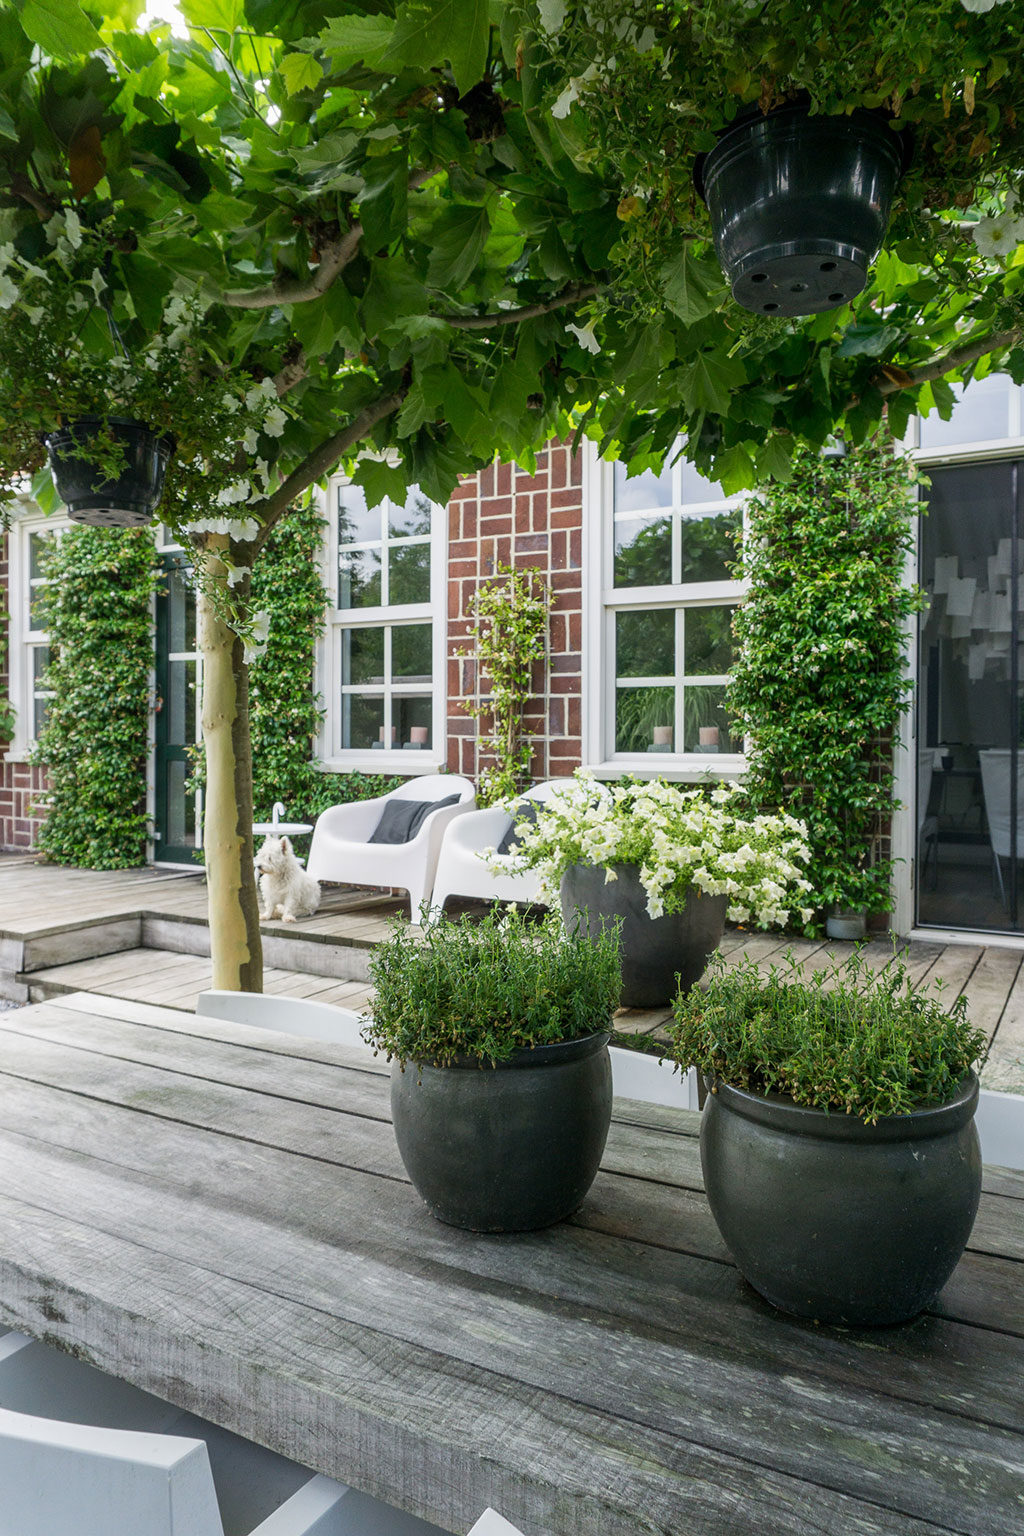 Tuinstijl: Modern, minimalistisch en Scandinavisch